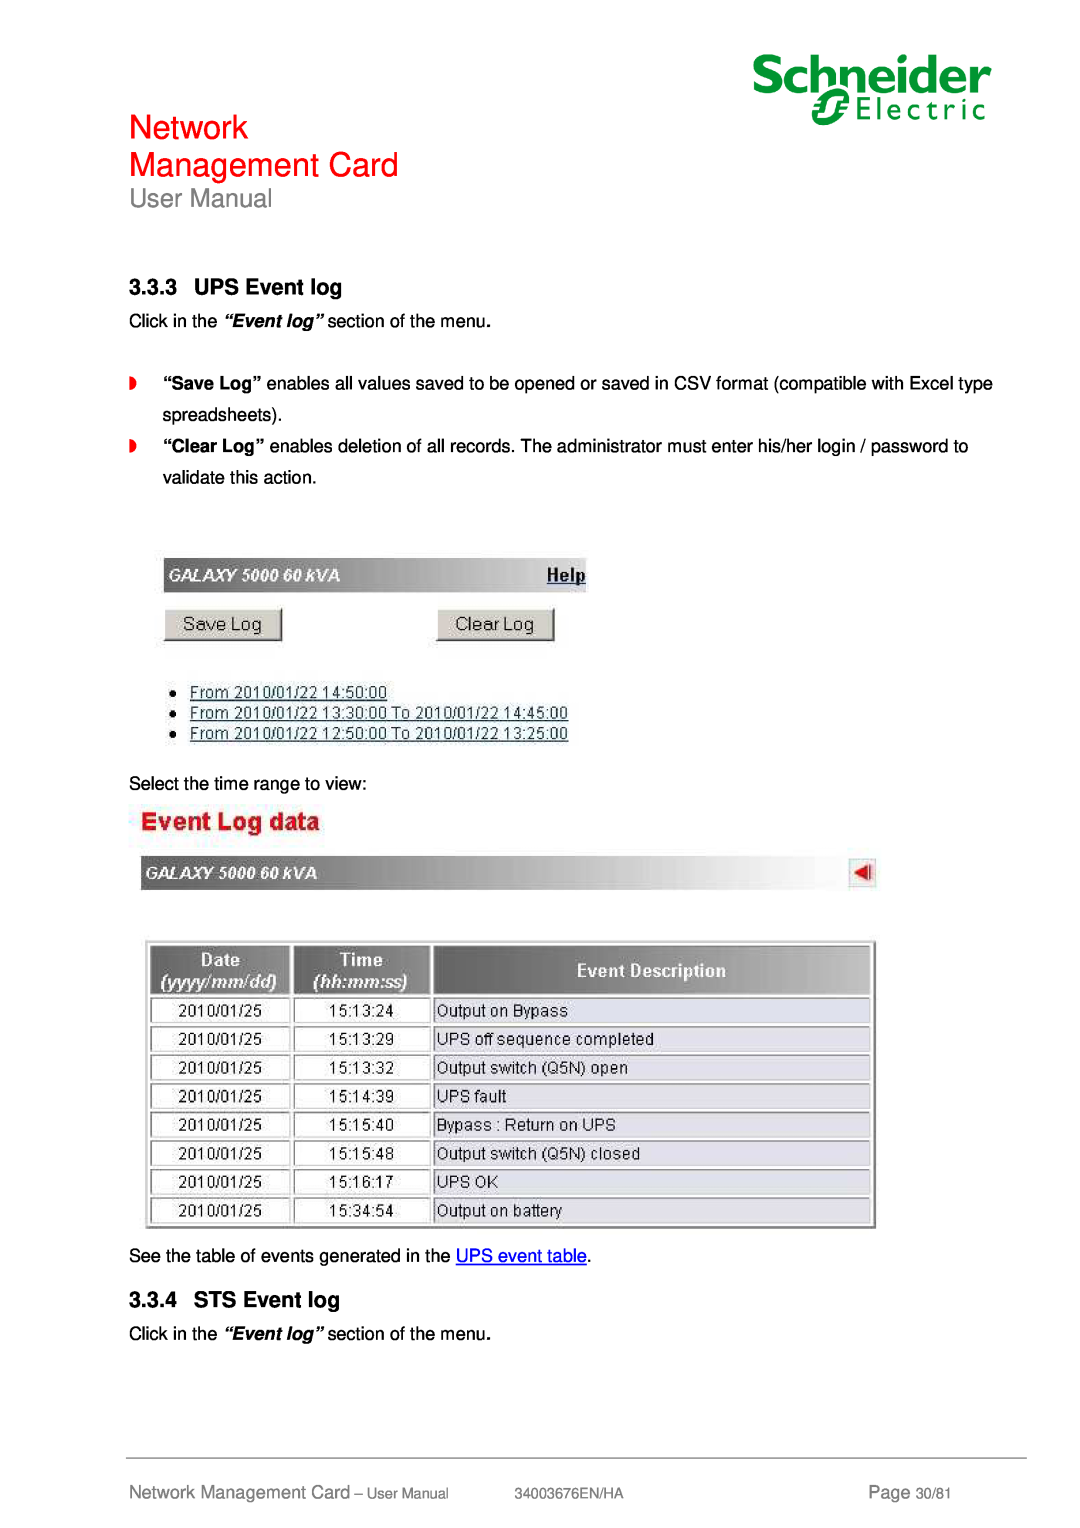 Schneider Electric 66846, 66074 user manual UPS Event log, STS Event log, Network Management Card, User Manual, Page 30/81 